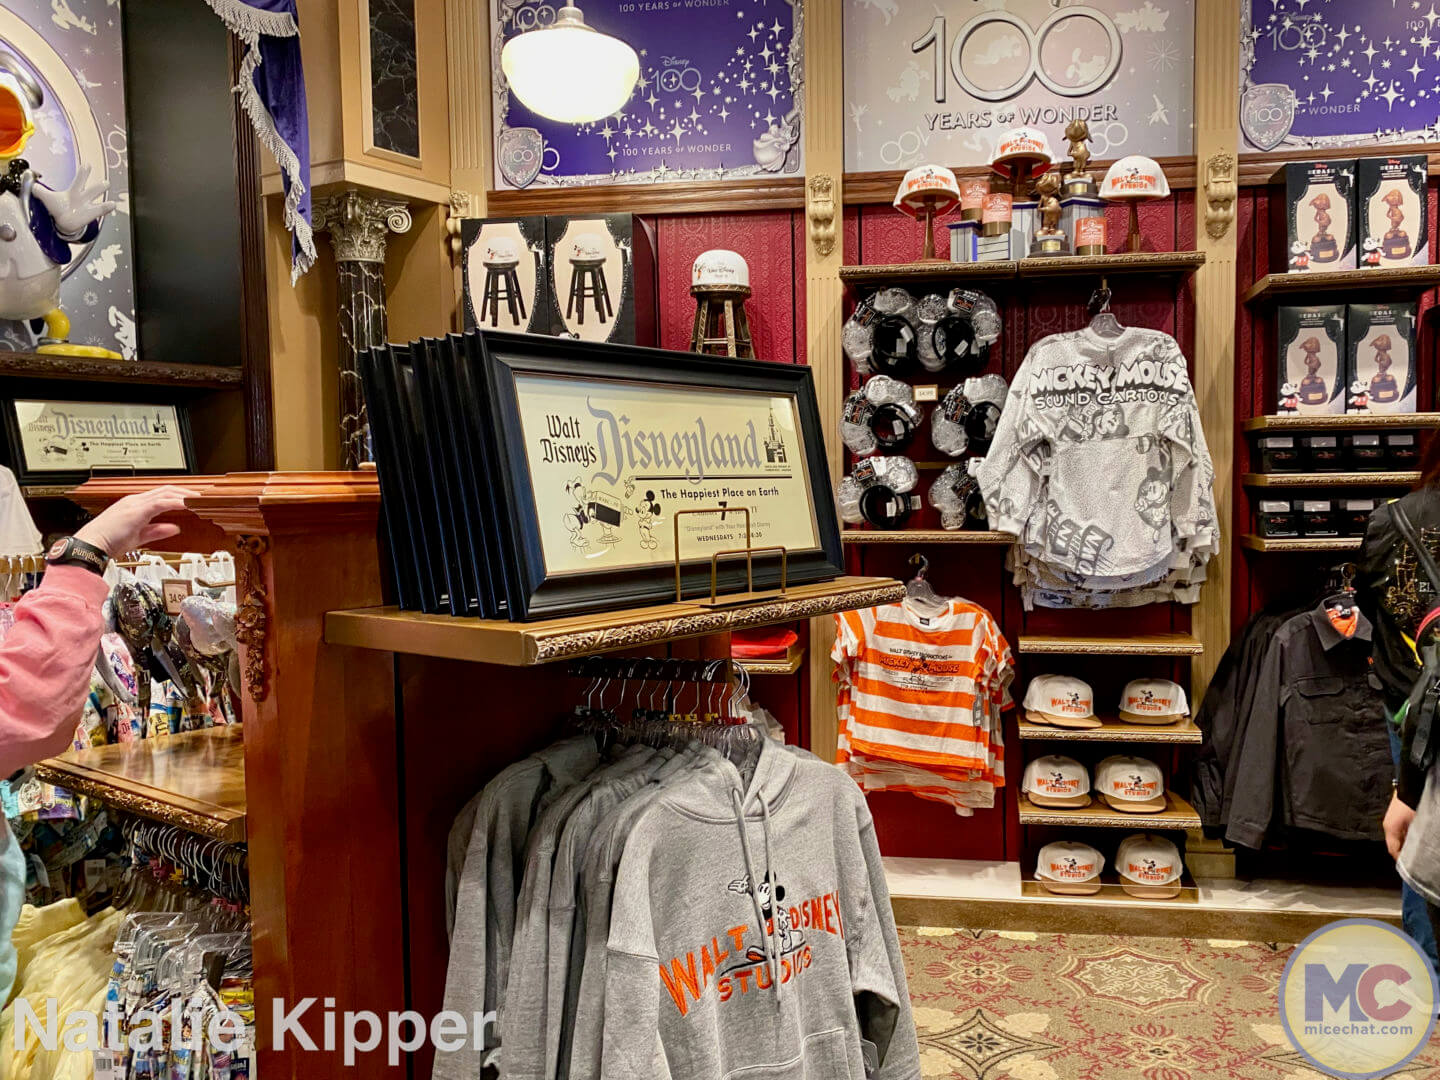 More Disney100 Merchandise Hits The Shelves at Disneyland!